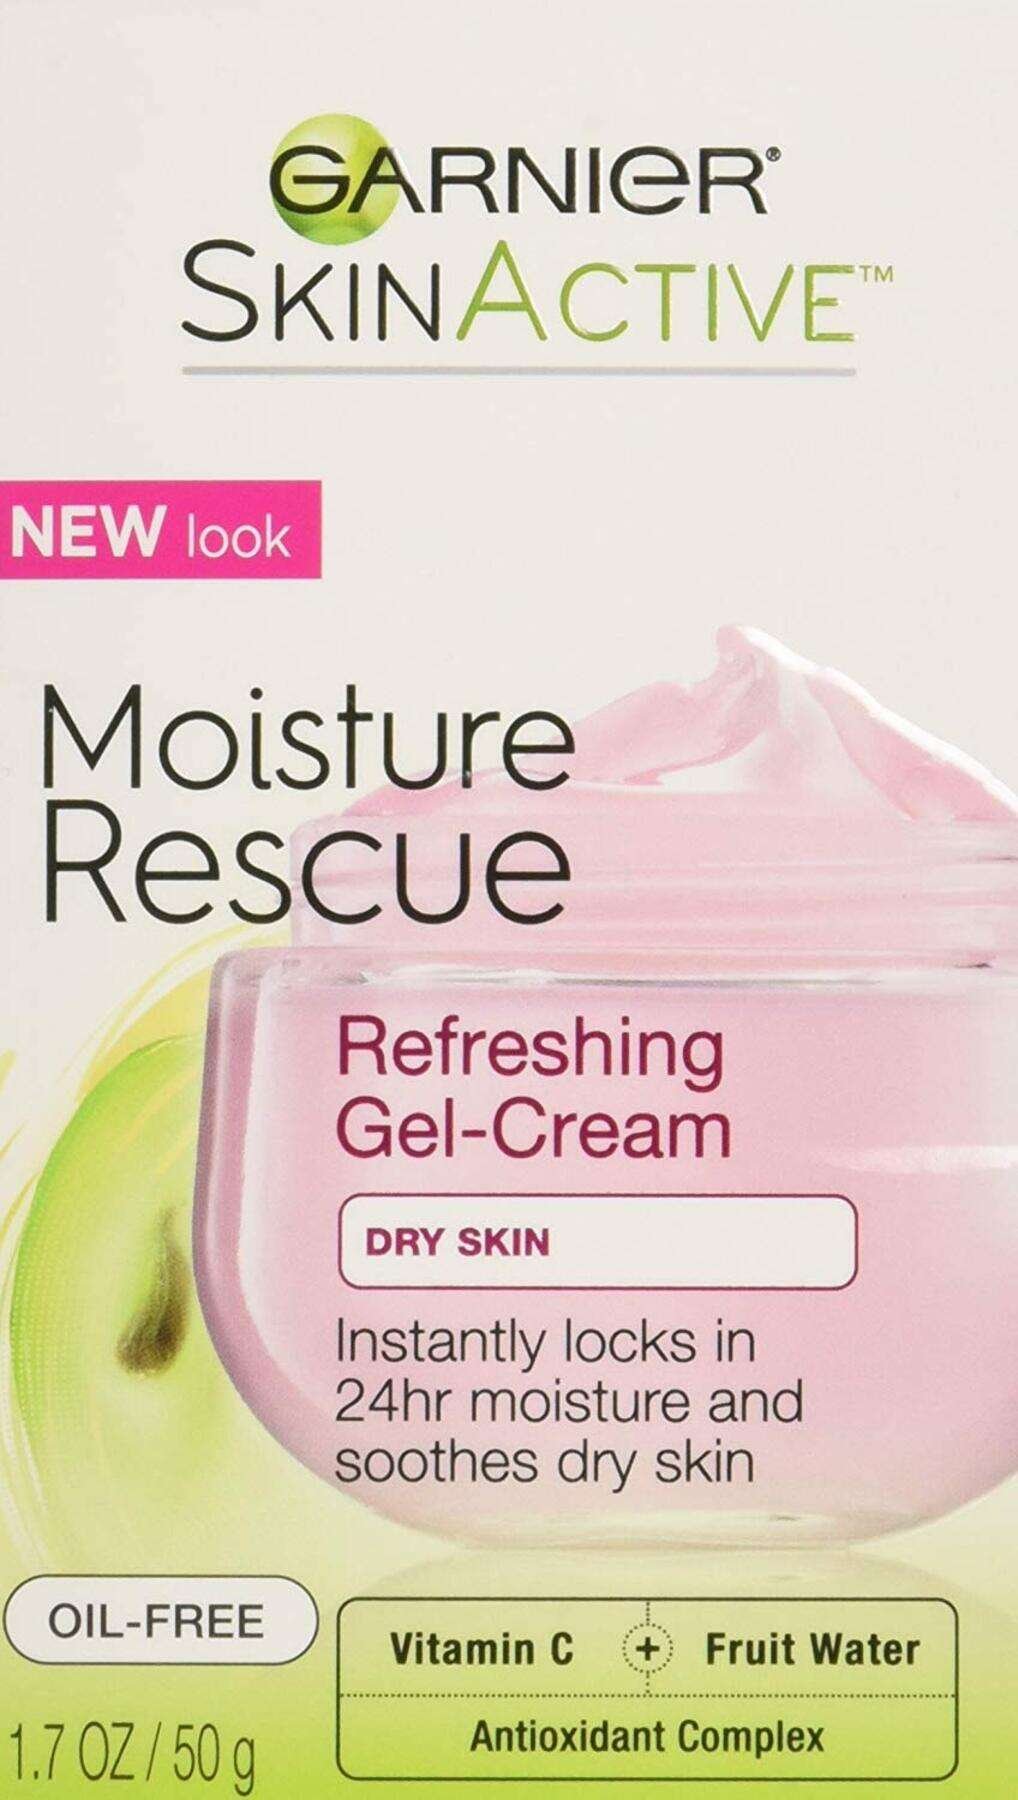 garnier cream skinactive moisture rescue refreshing gel cream for dry skin 603084287765 boxed